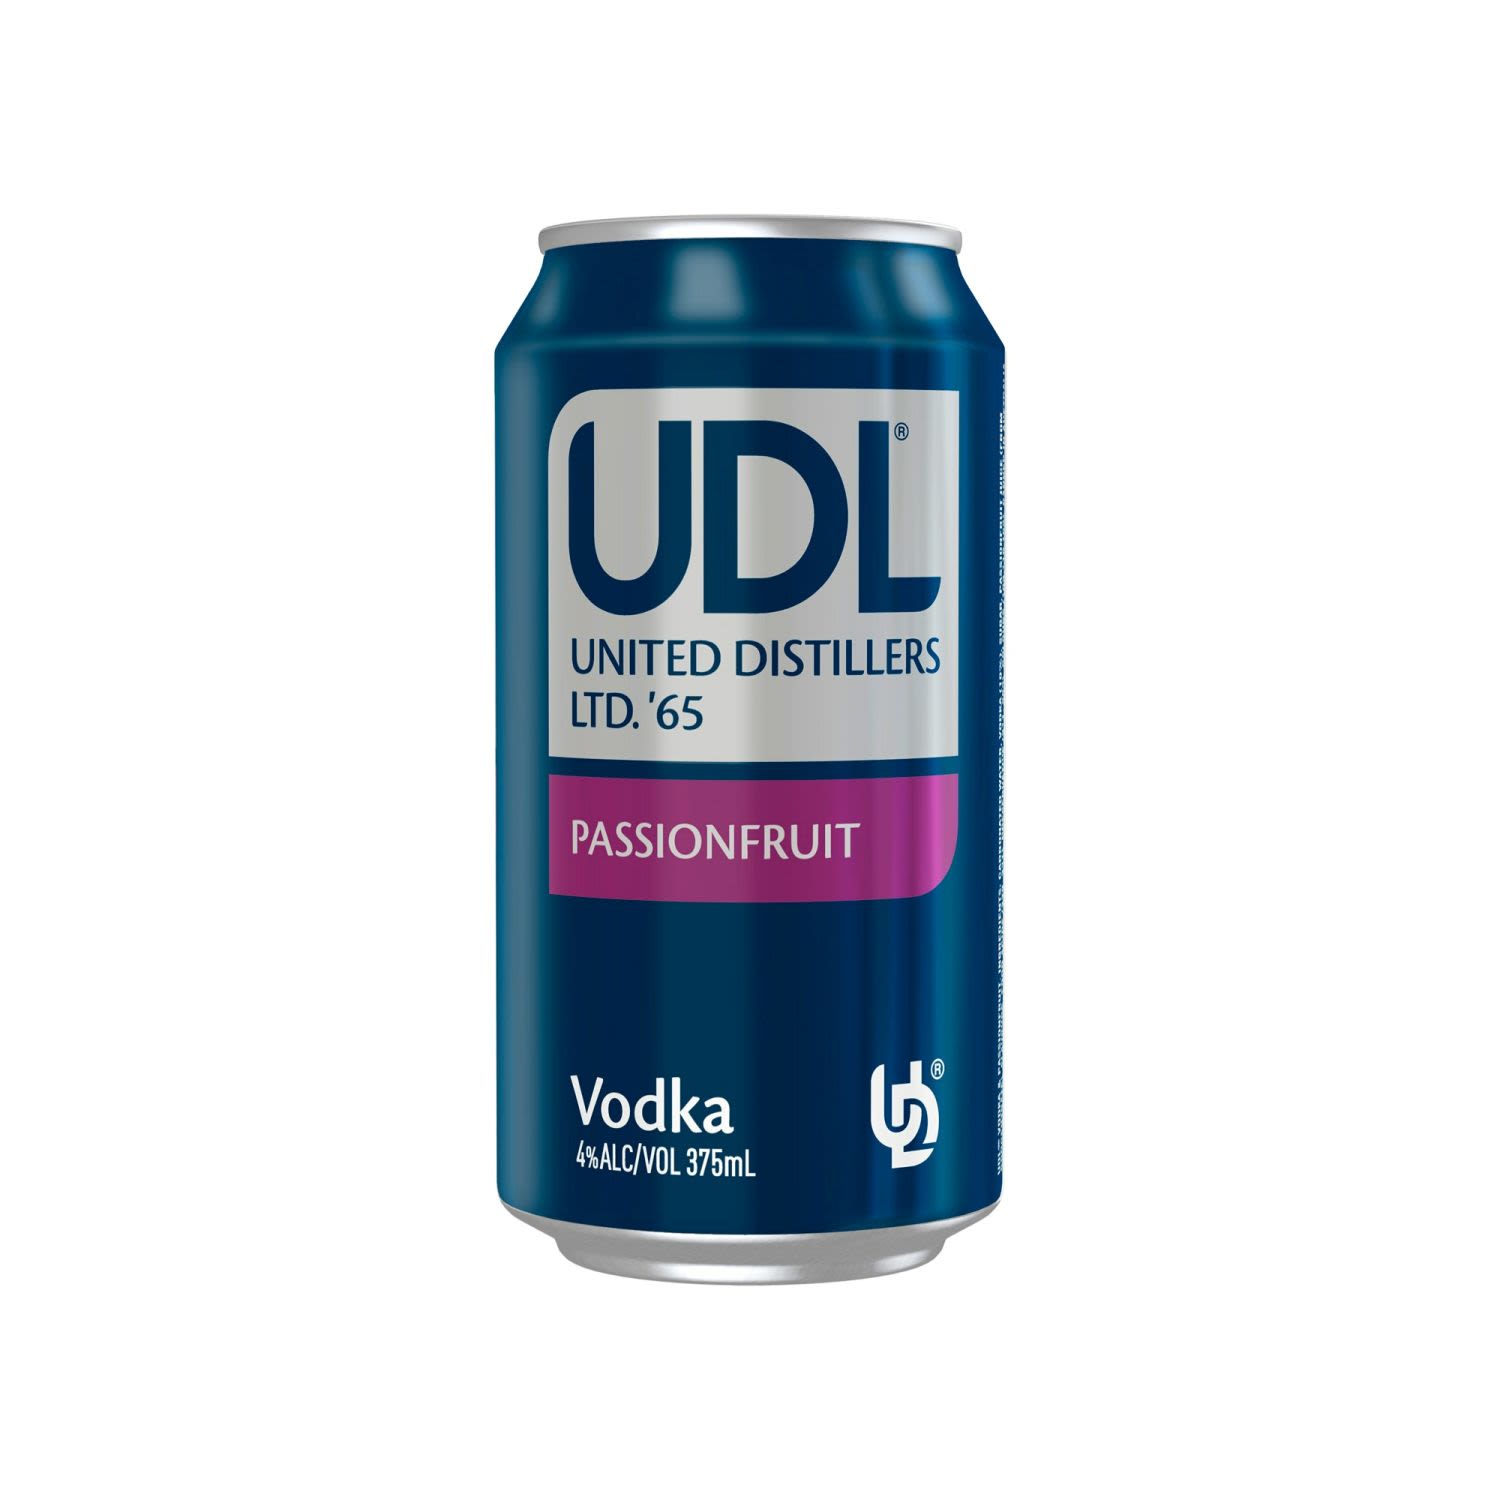 UDL Vodka & Passionfruit Can 375mL 6 Pack